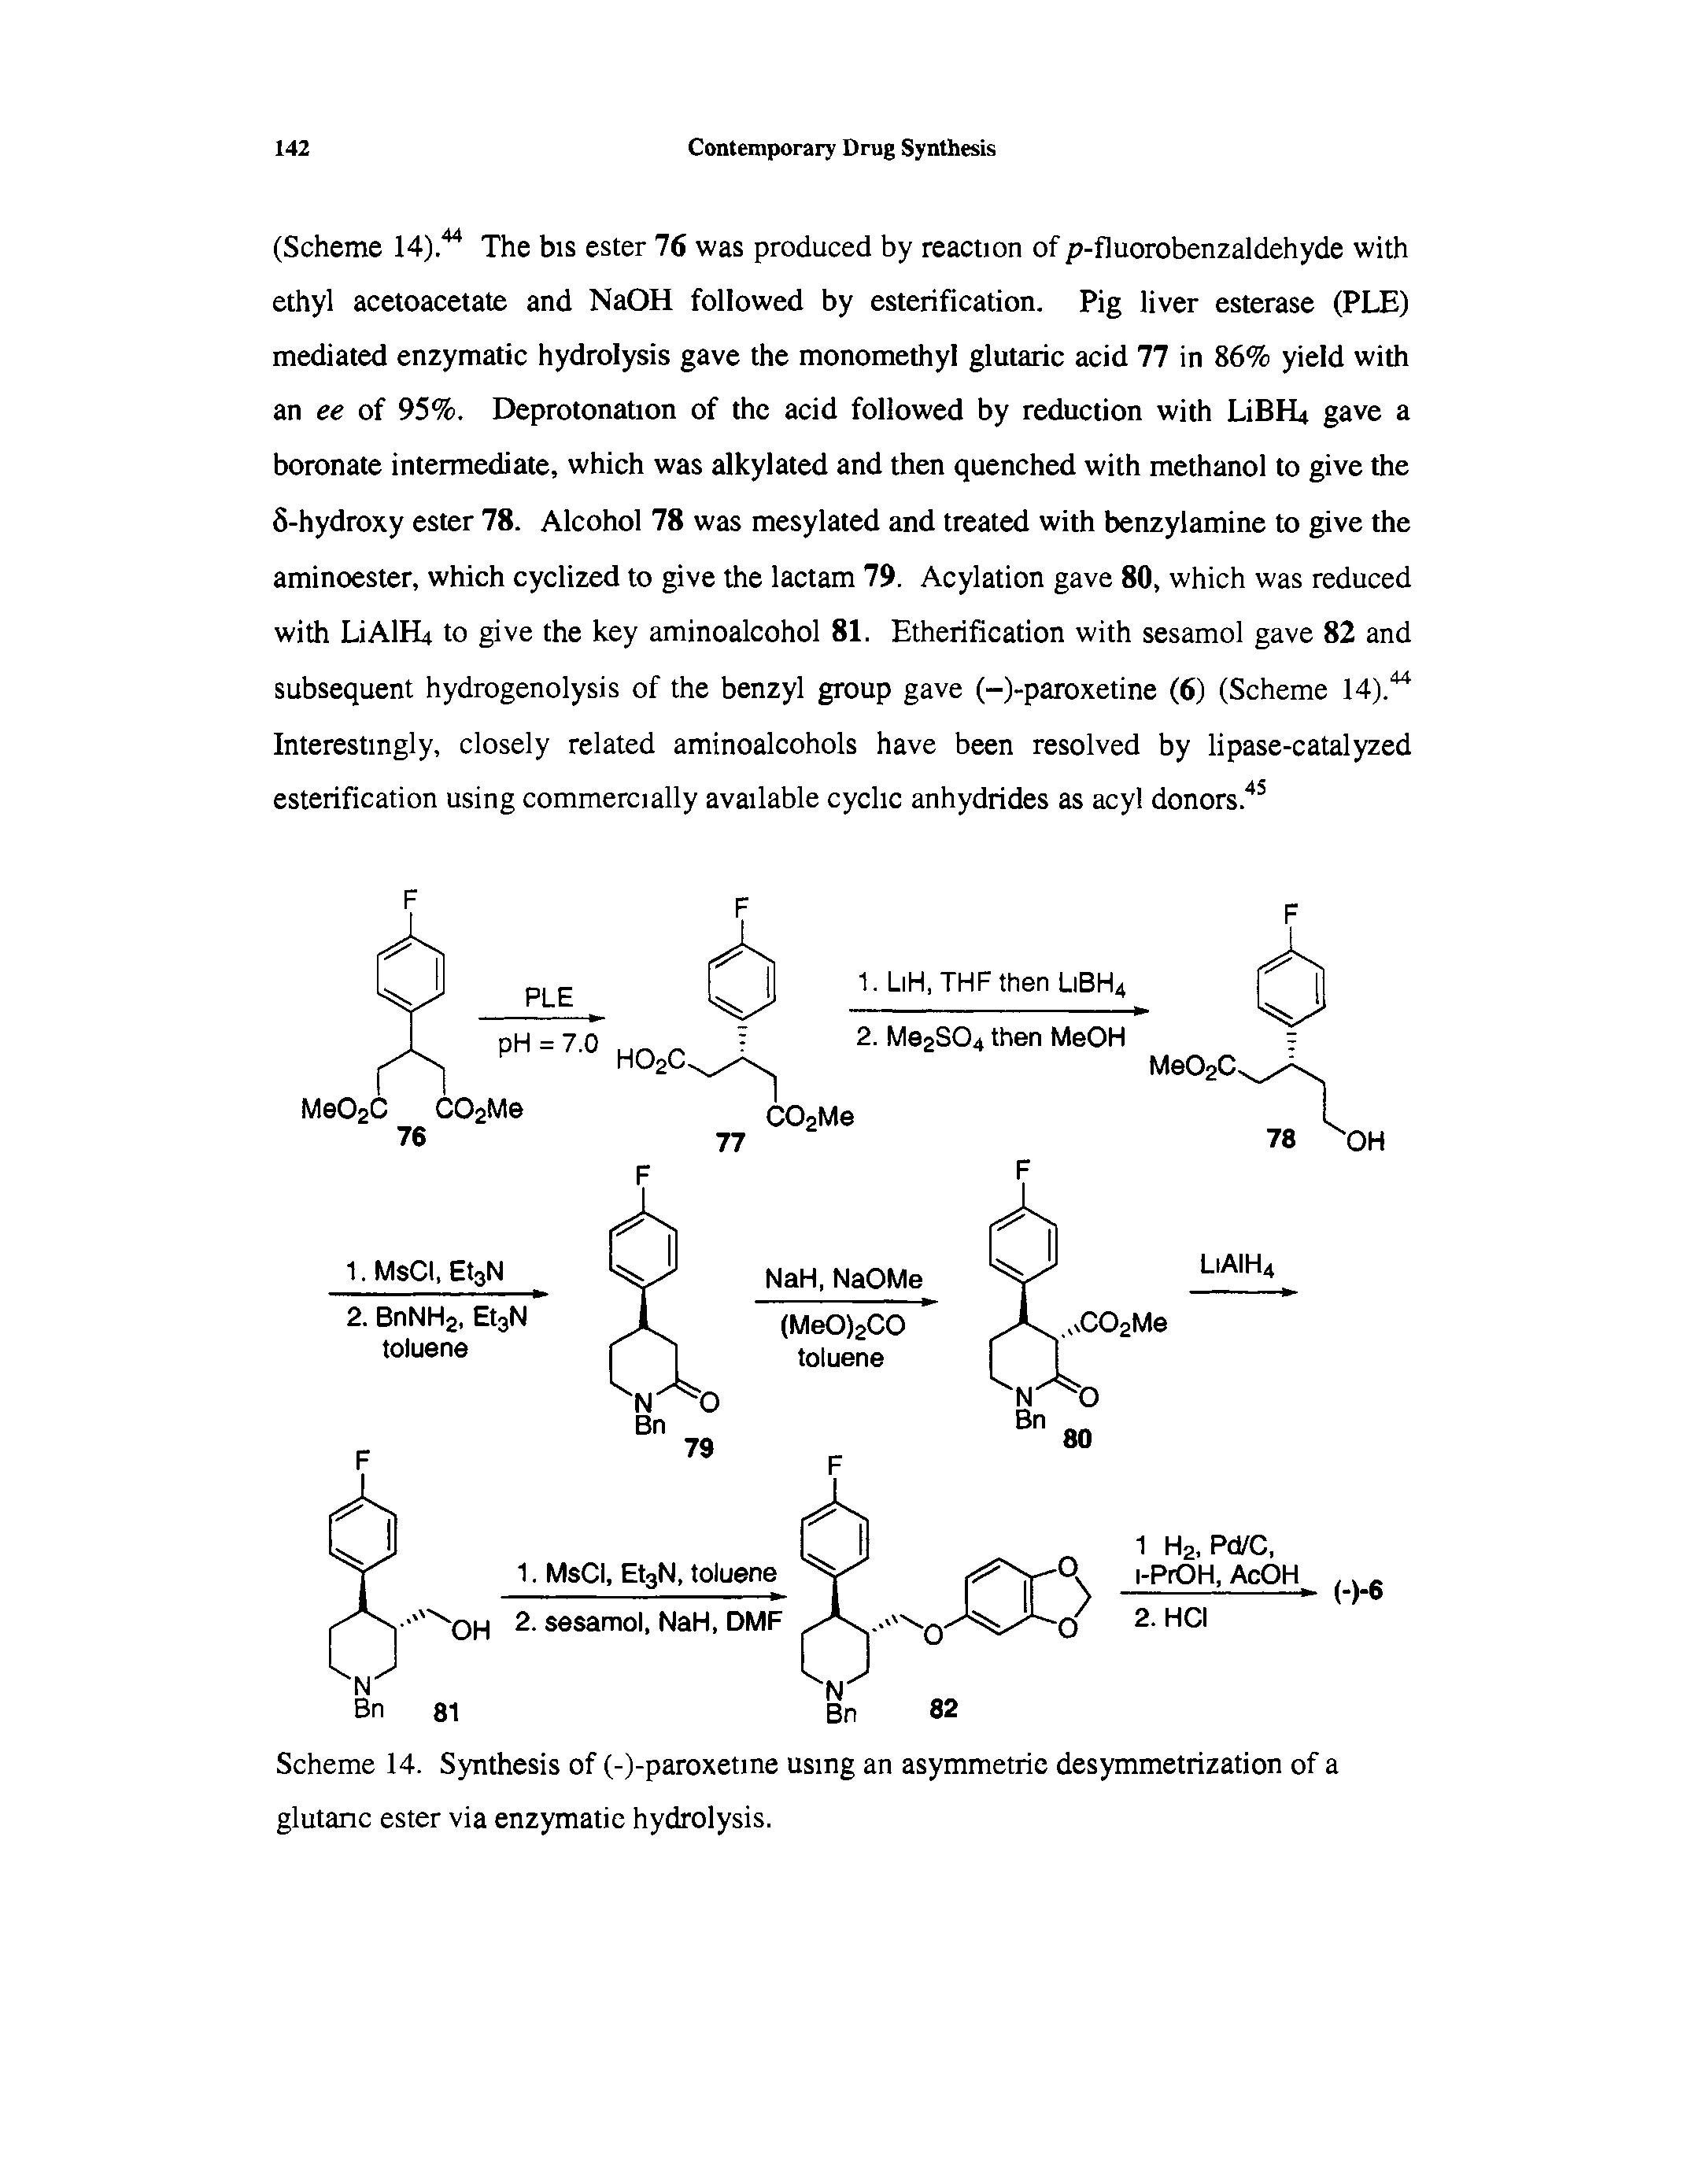 Scheme 14- Synthesis of (-)-paroxetine using an asymmetric desymmetrization of a glutanc ester via enzymatic hydrolysis.